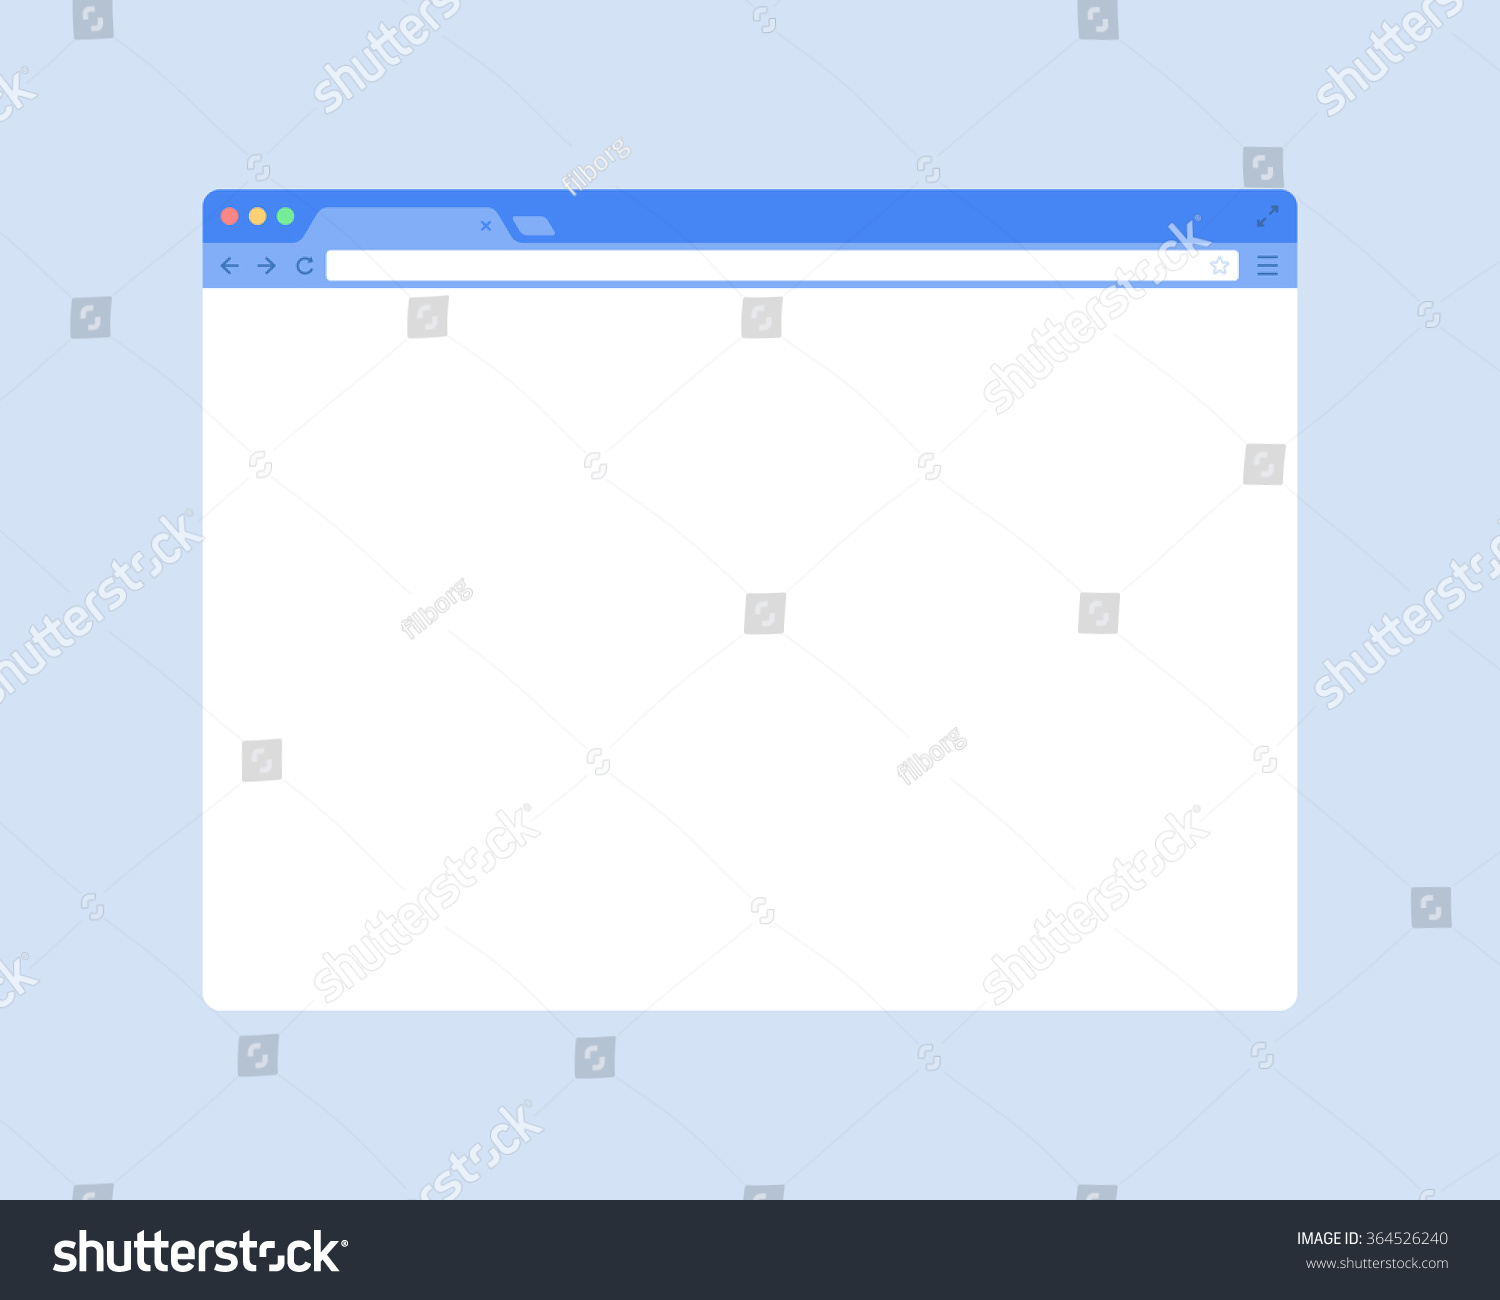 Download Flat Web Browser Window Mockup Blank Stock Vector 364526240 - Shutterstock